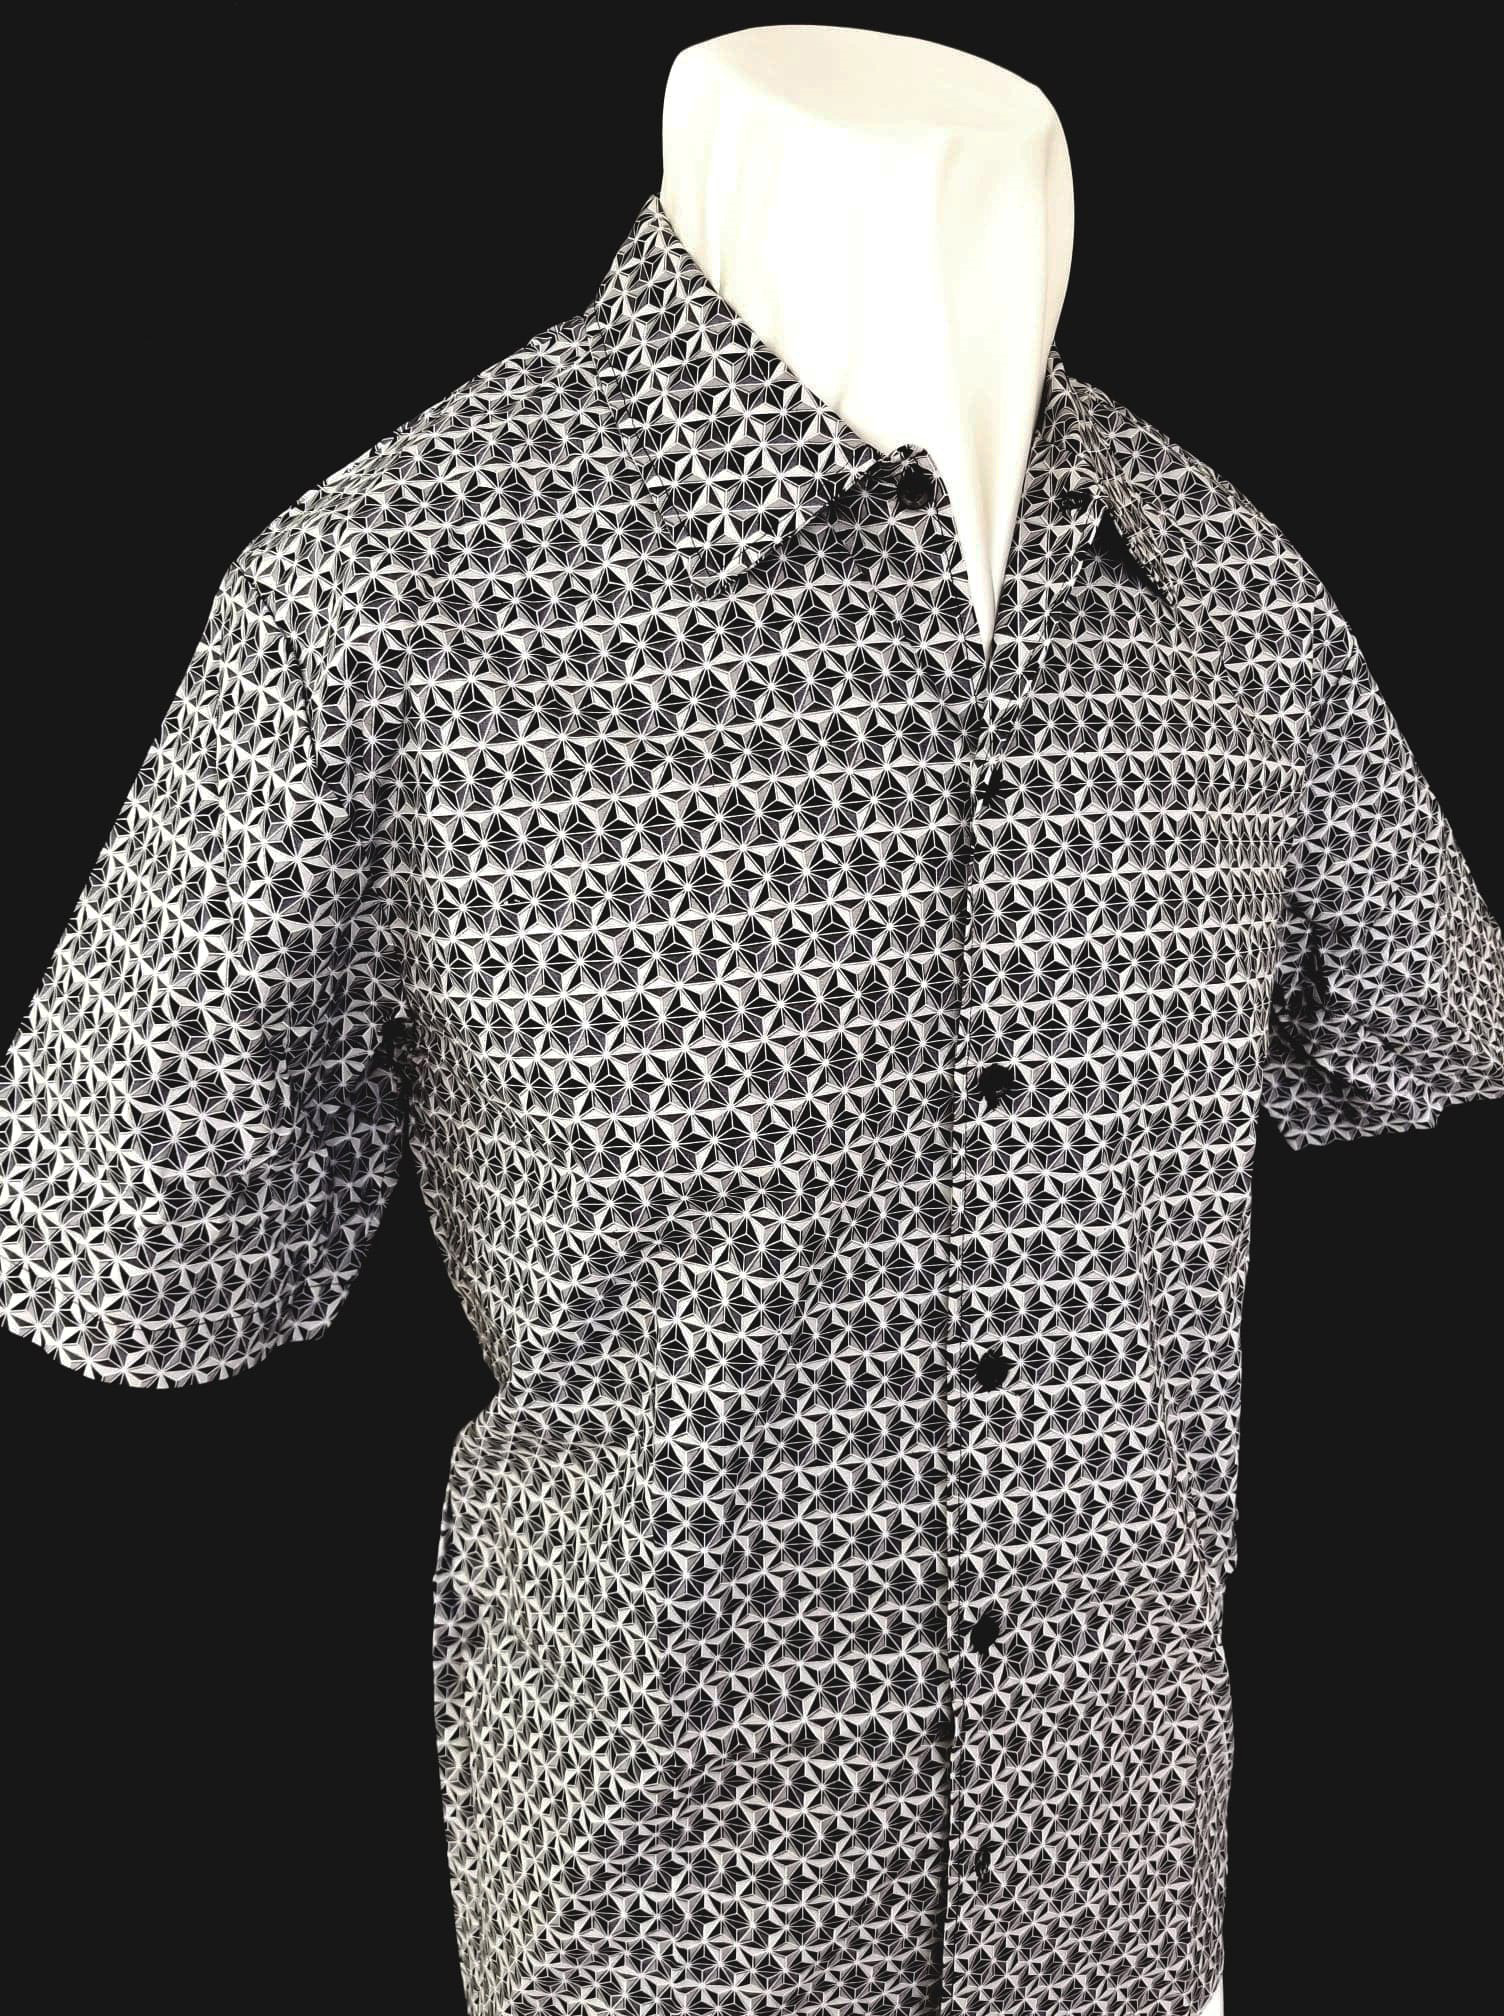 50's Era Shirts — B&K Enterprises Costume Company